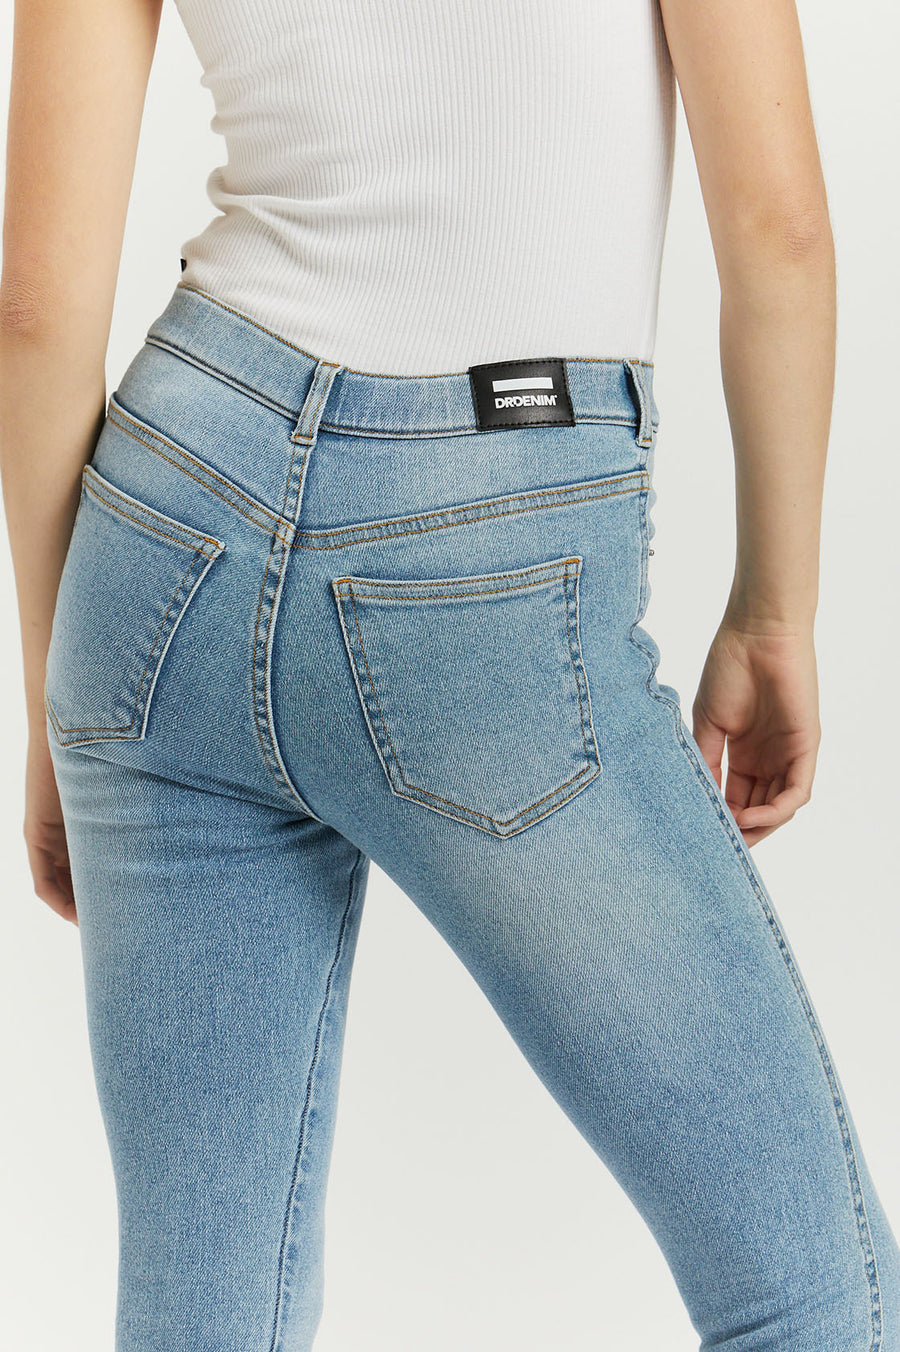 Lexy Jeans - Breeze Light Stone - Dr Denim Jeans - Australia & NZ